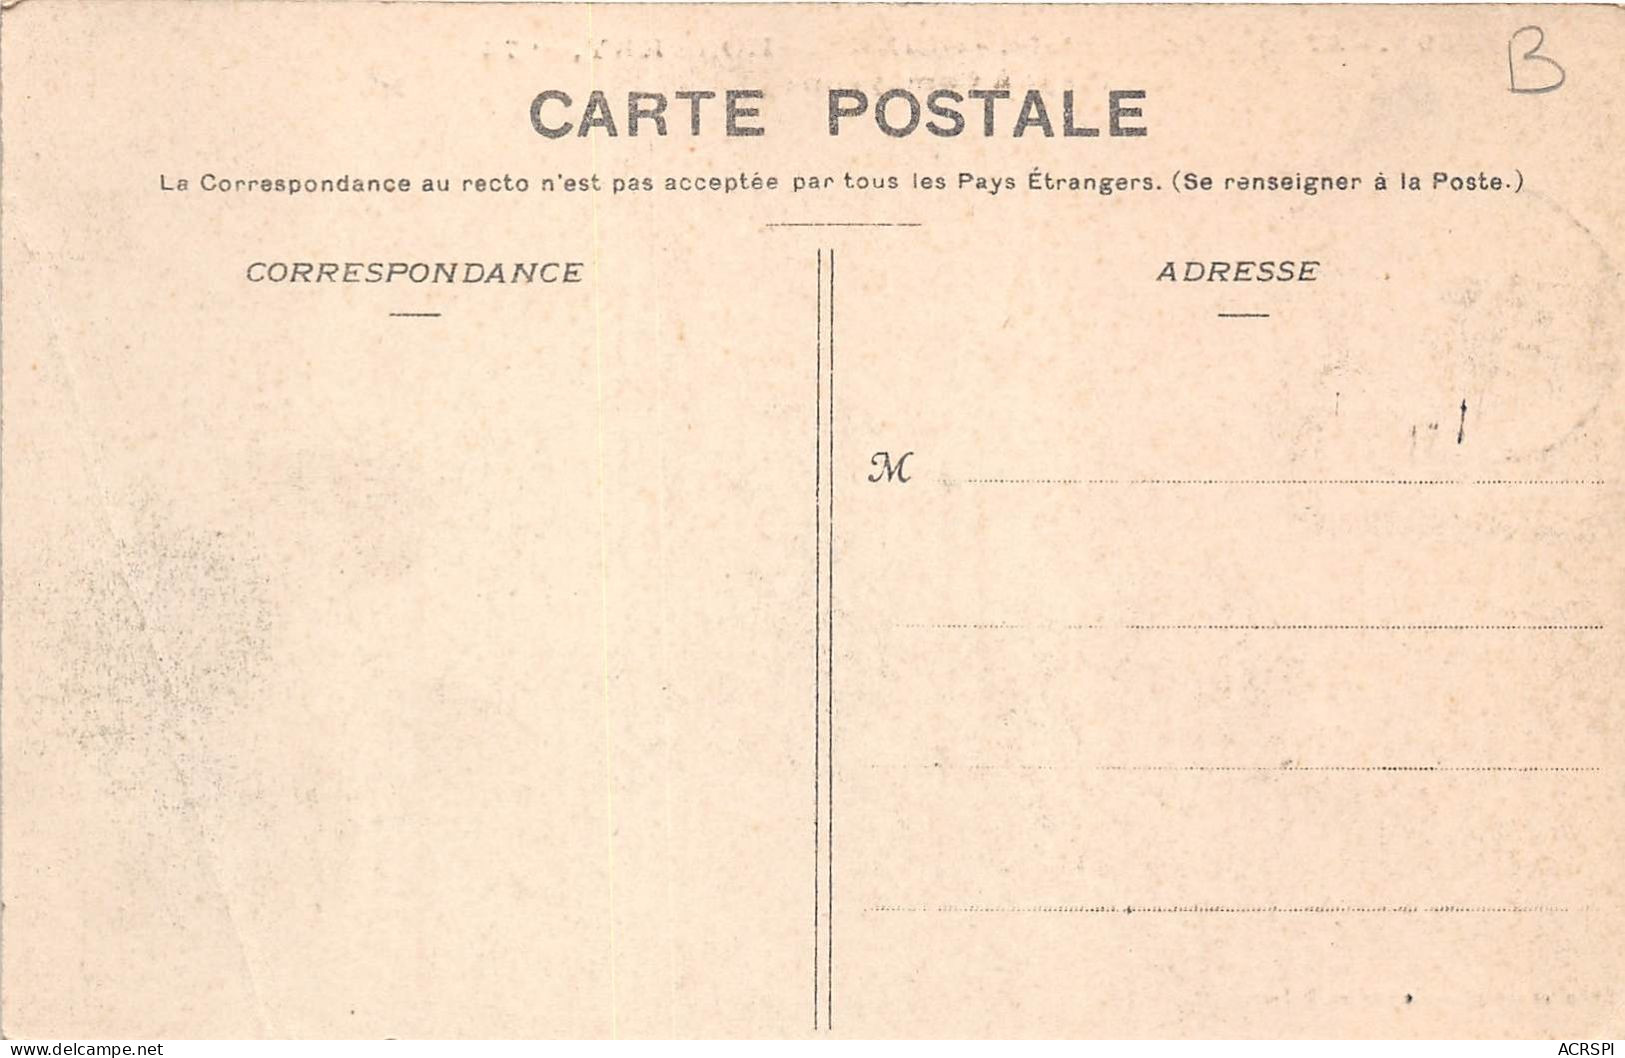 GUINEE Francaise Conakry  La Plage Camayenne  (scan Recto Verso ) Nono0027 - Guinea